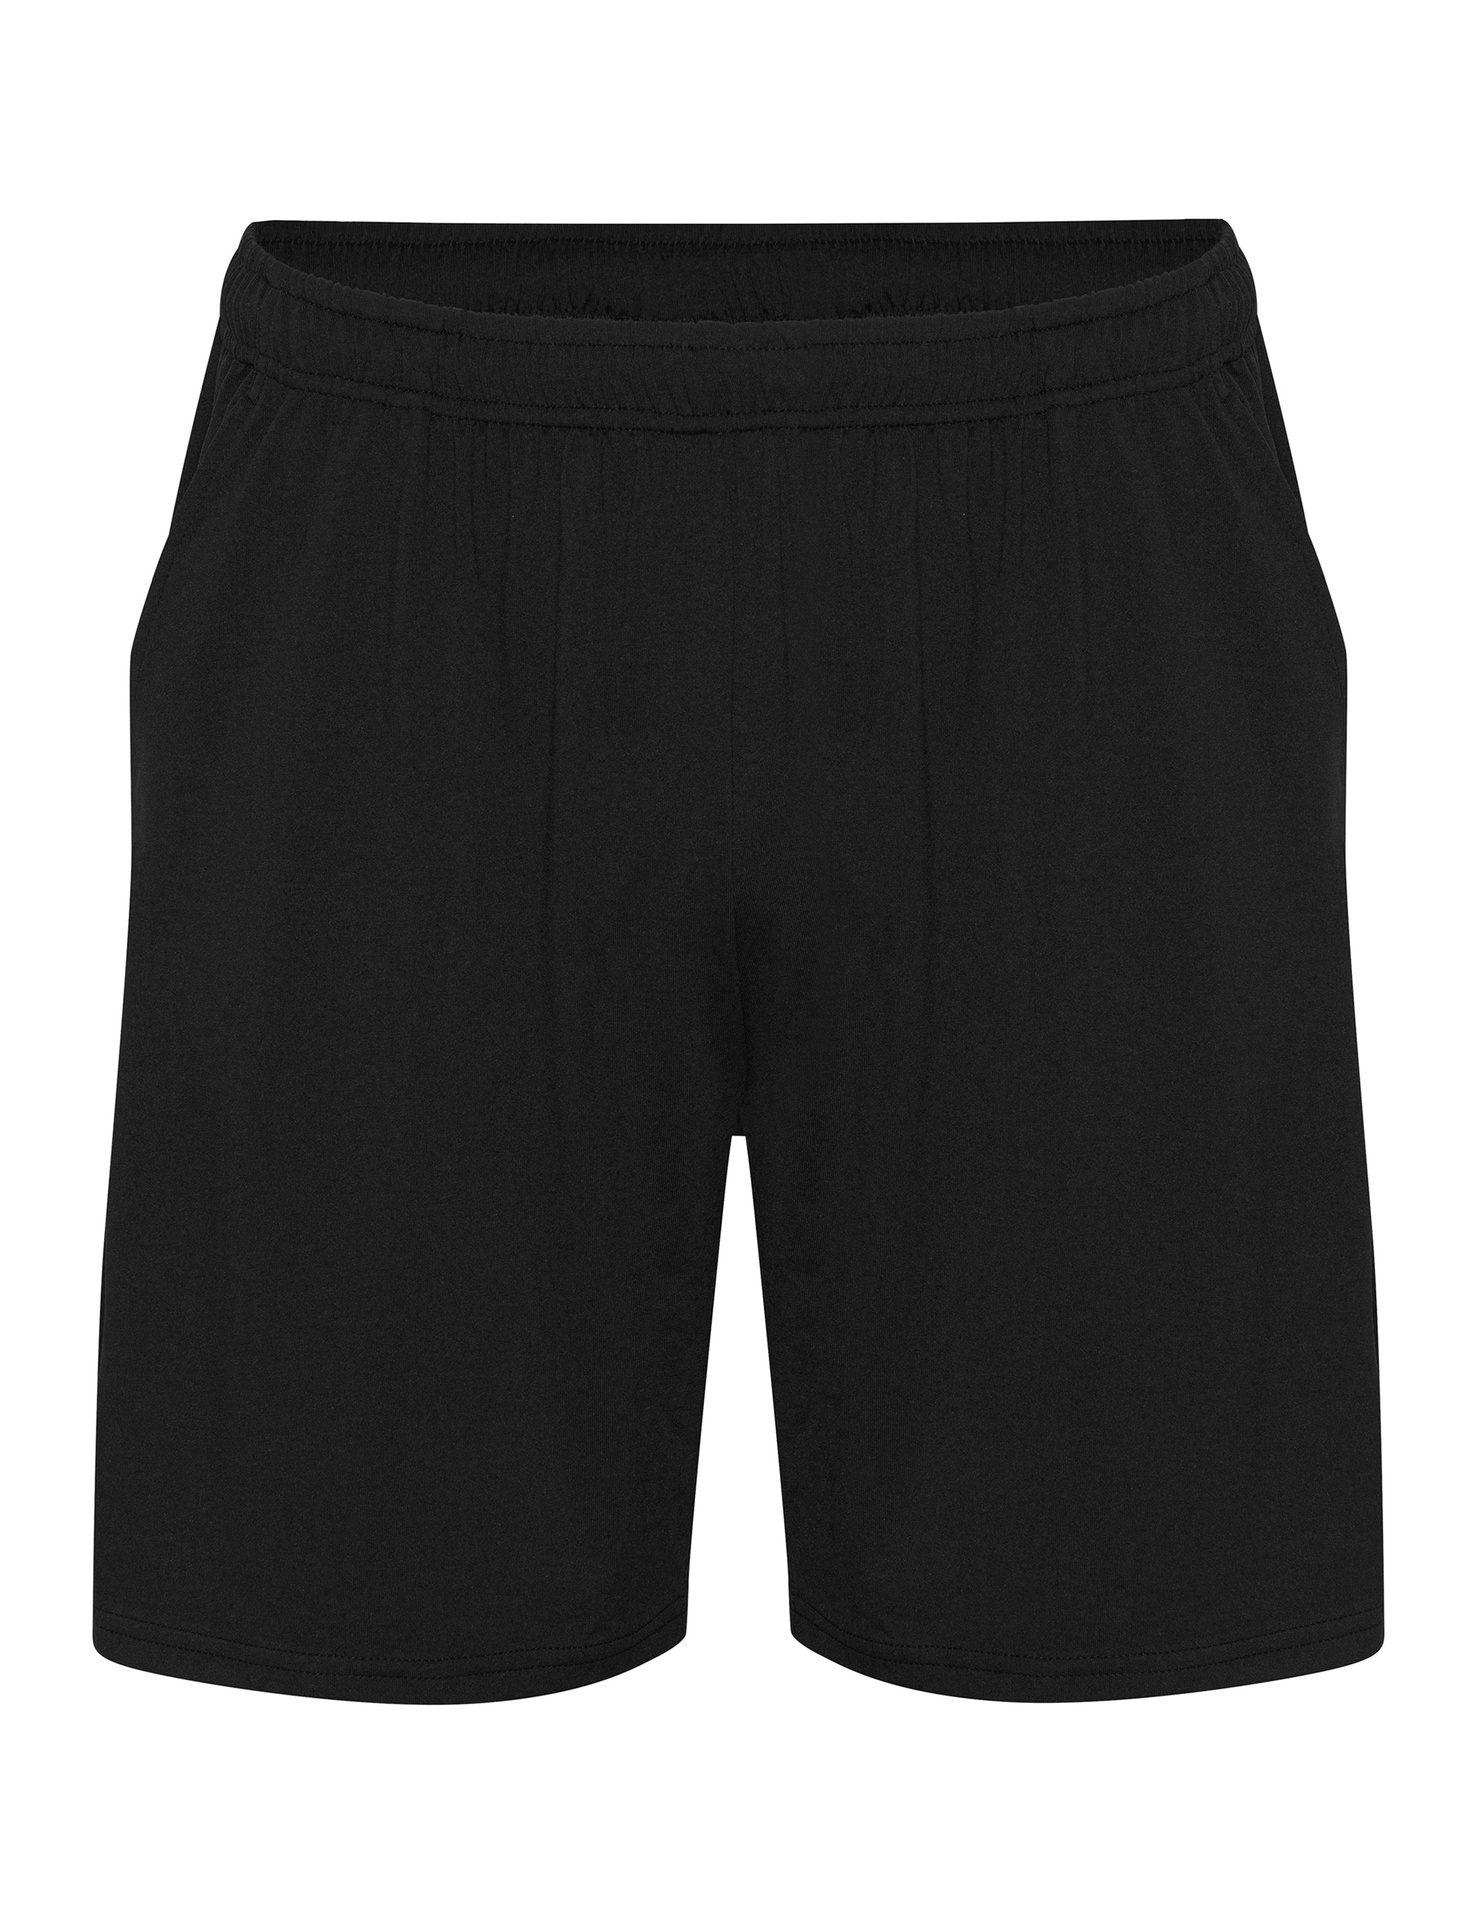 [PR/03856] Unisex Recycled Performance Shorts (Black 03, XS)